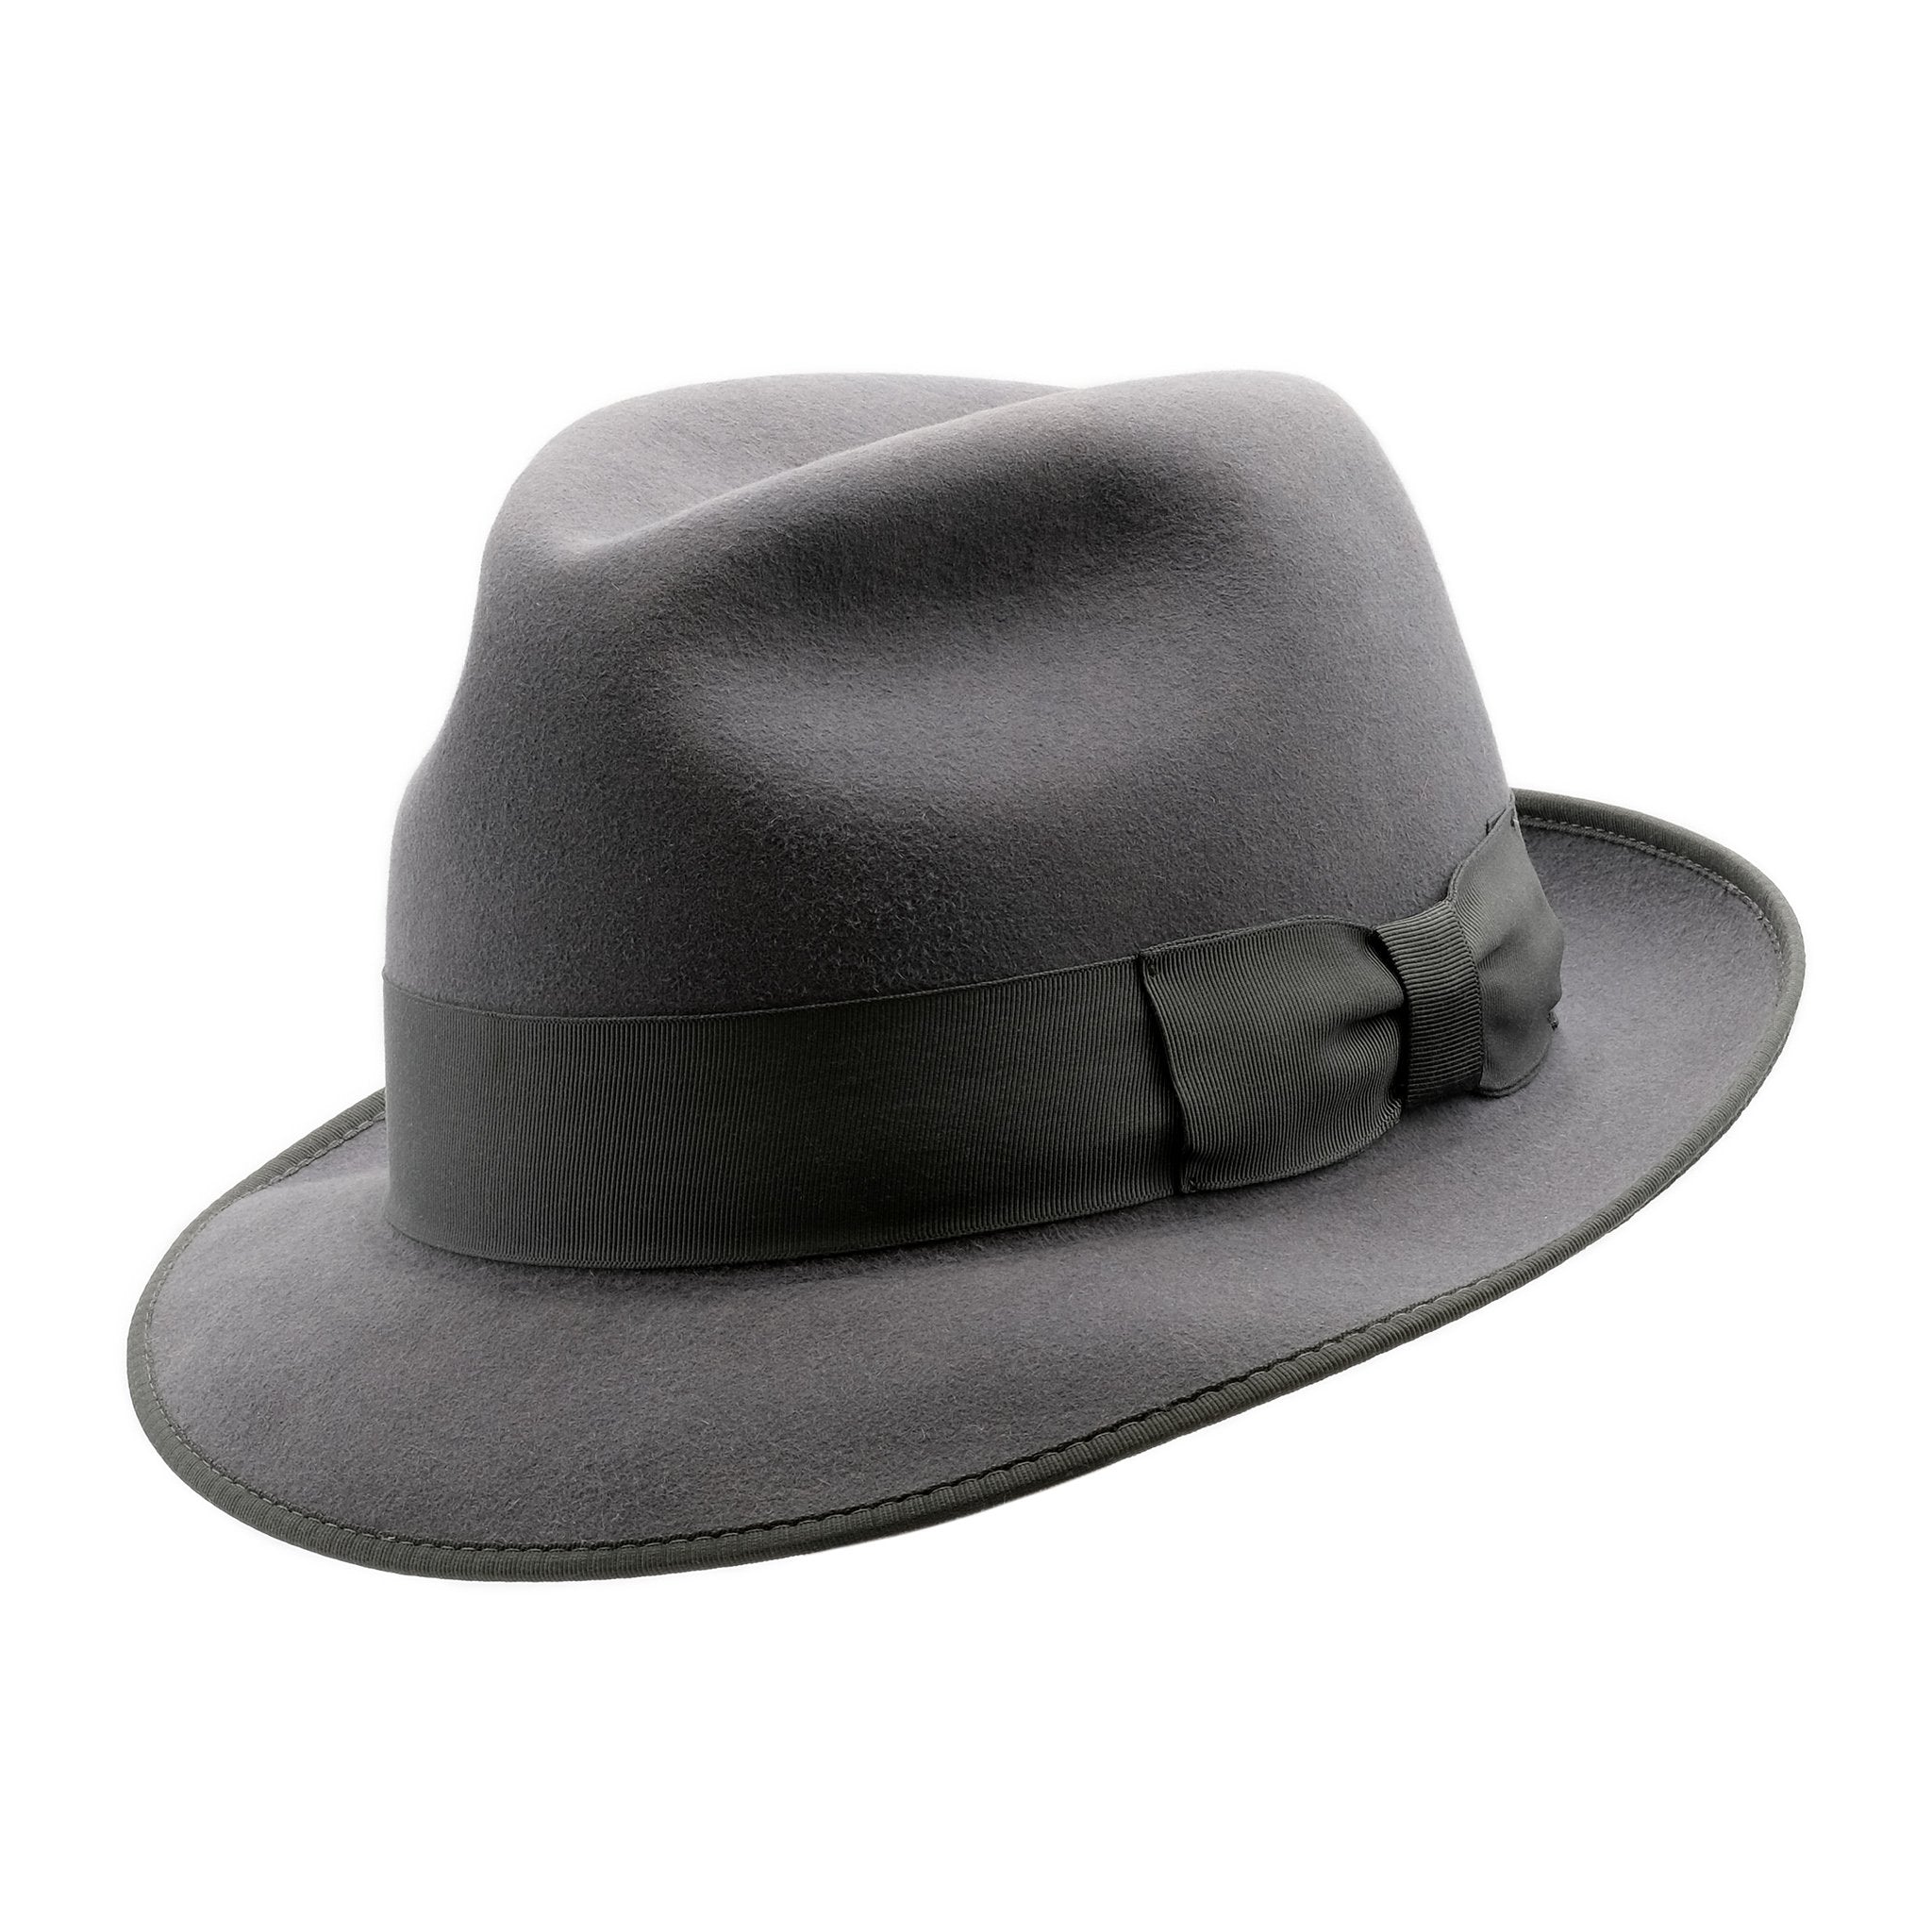 Angle view of Akubra Hampton hat in Cruiser Grey colour